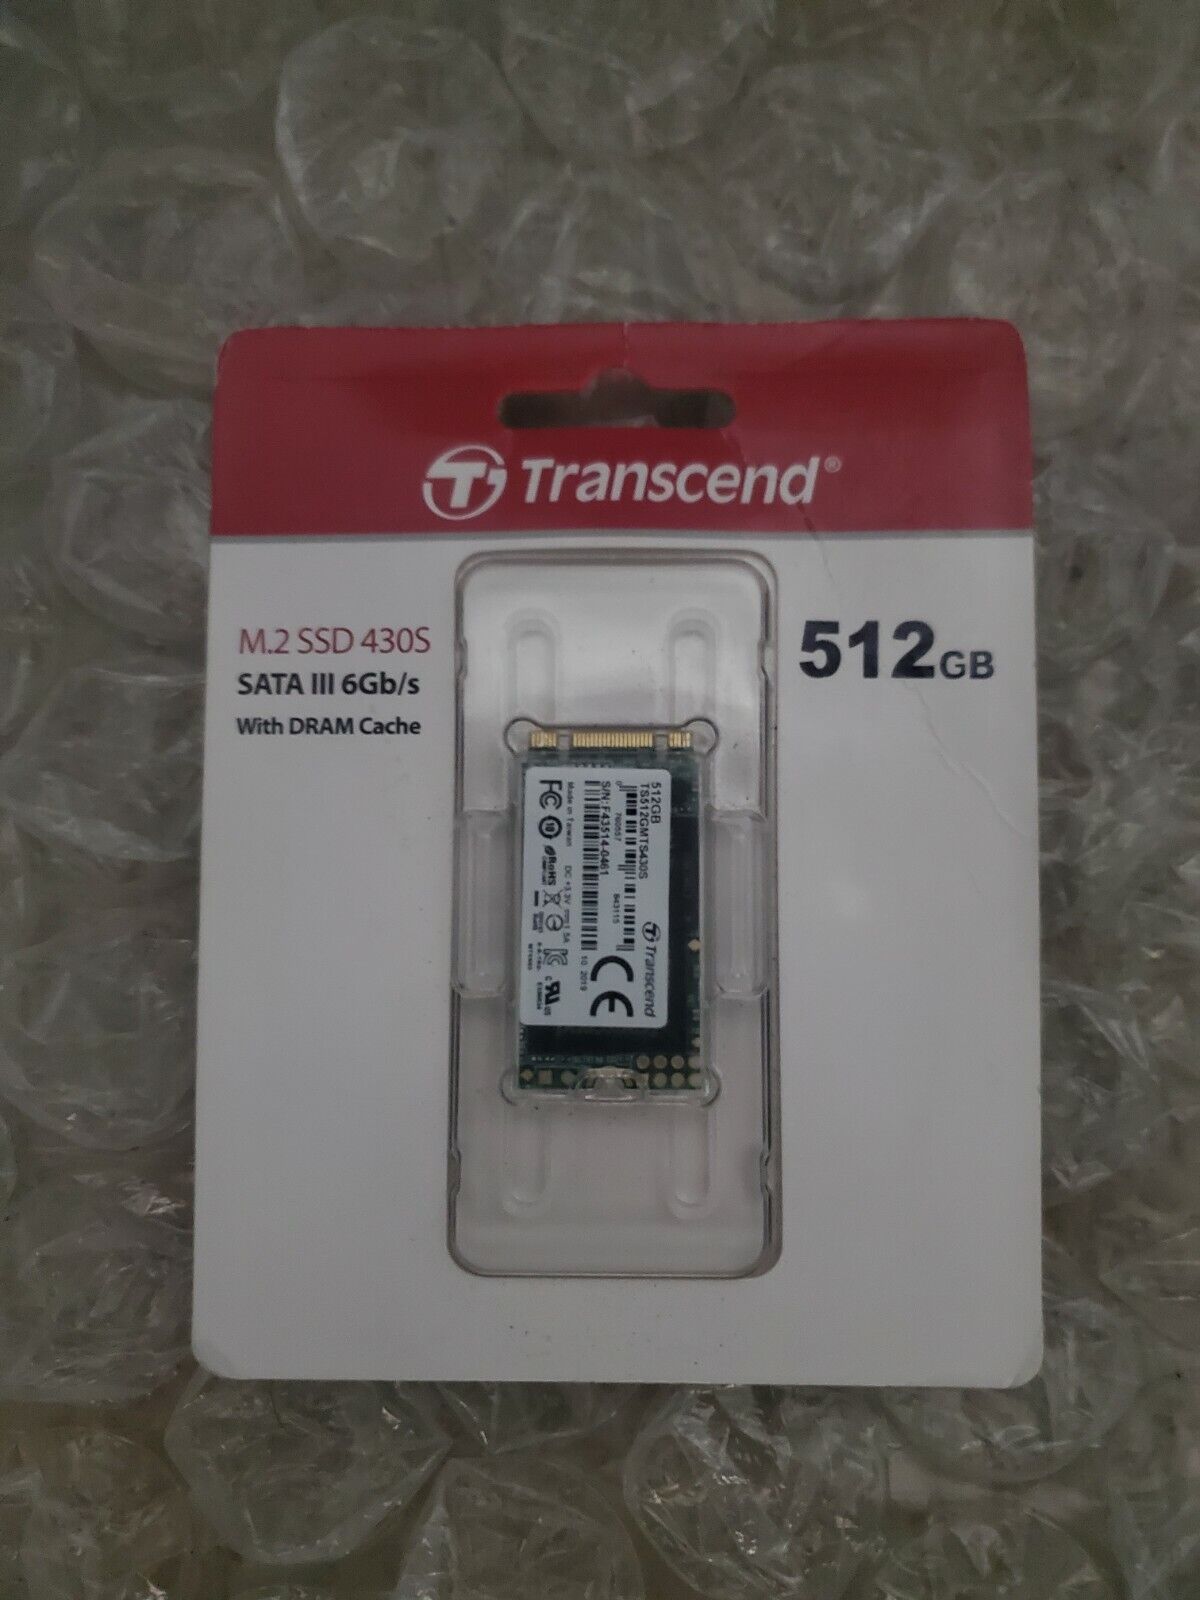 Transcend 512GB SATA III 6GB/S MTS430S 42 mm M.2 SSD 430S Solid State Drive TS51